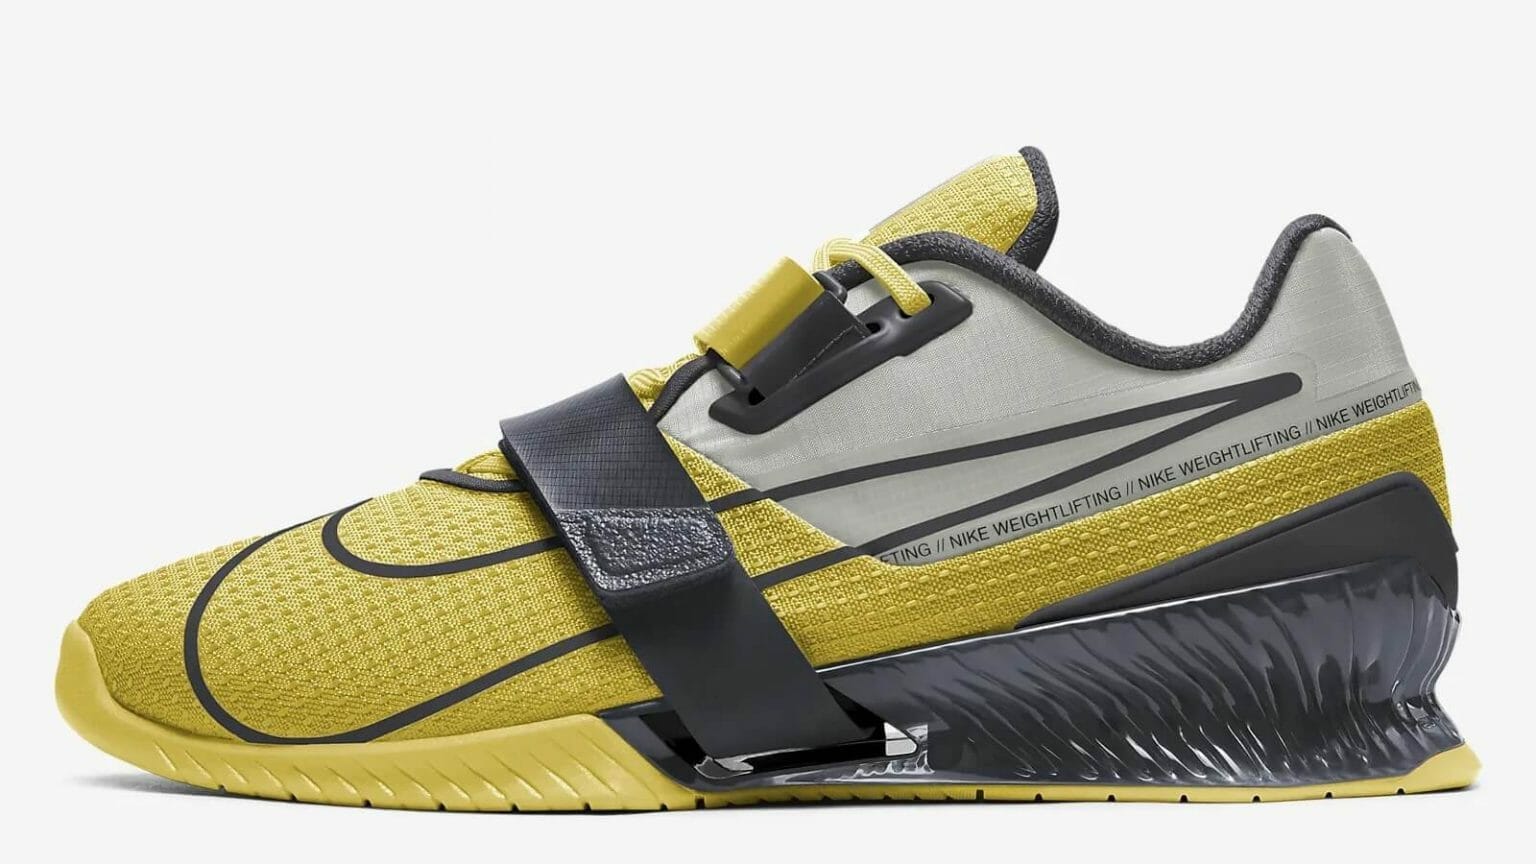 Nike Romaleos 4 Weightlifting Shoe Yellow 1536x864 ?strip=all&lossy=1&ssl=1